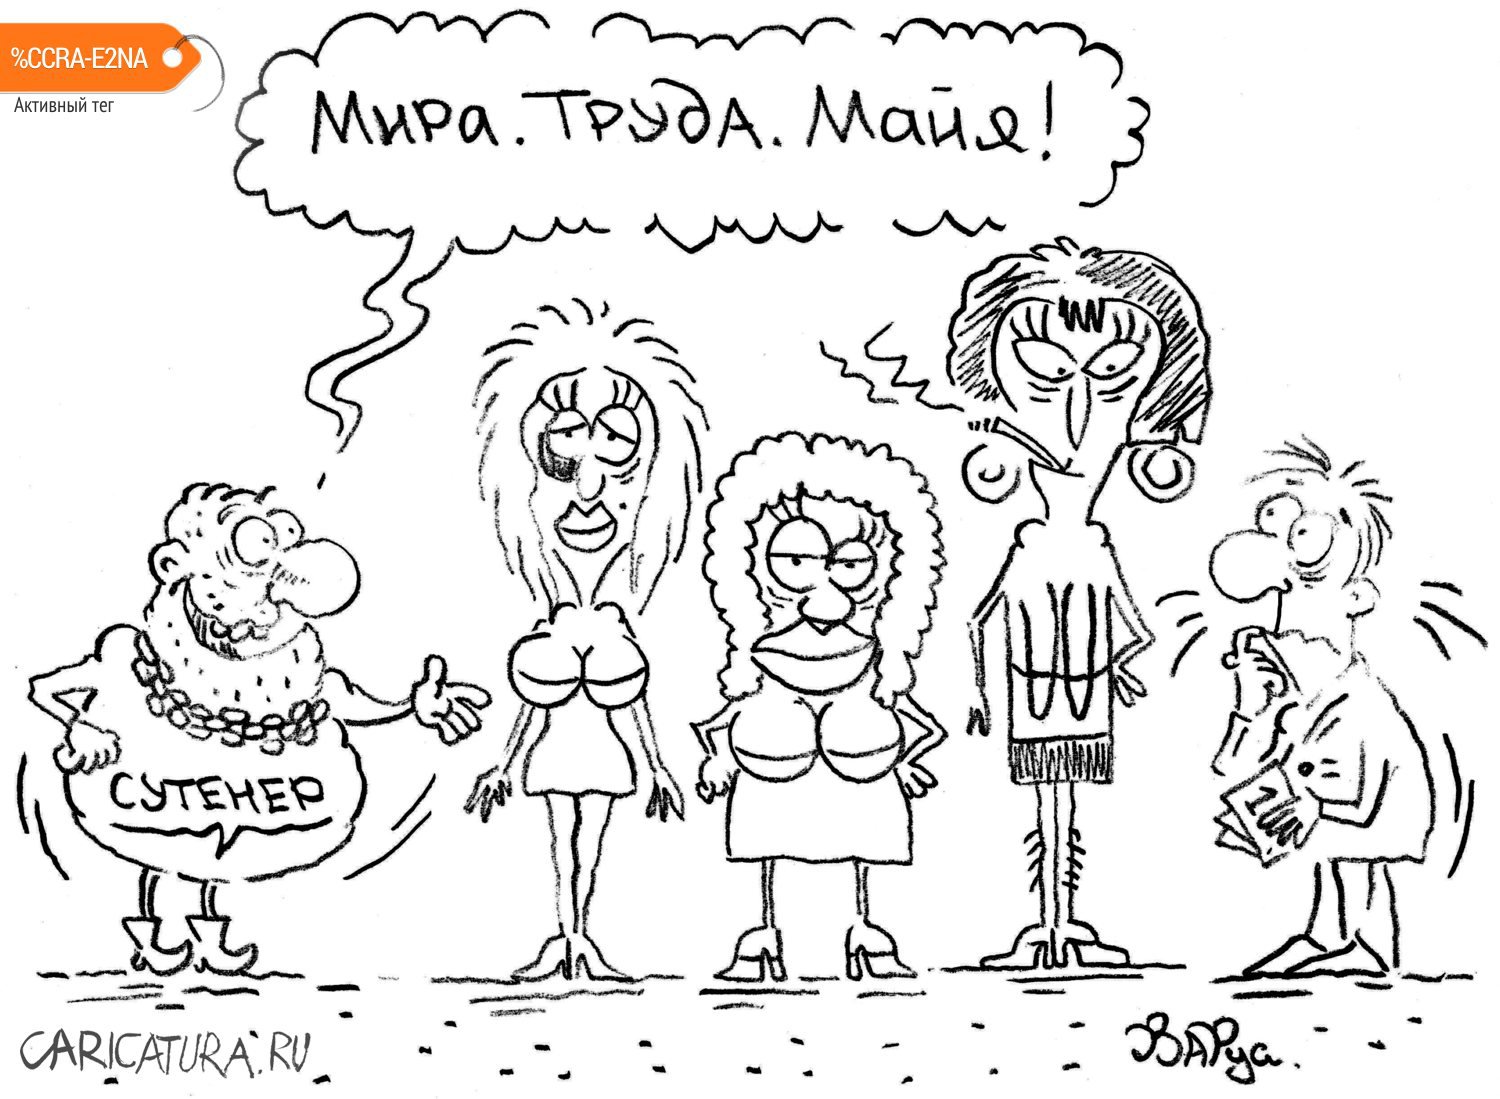 Карикатура "Мира. Труда. Майя", Руслан Валитов